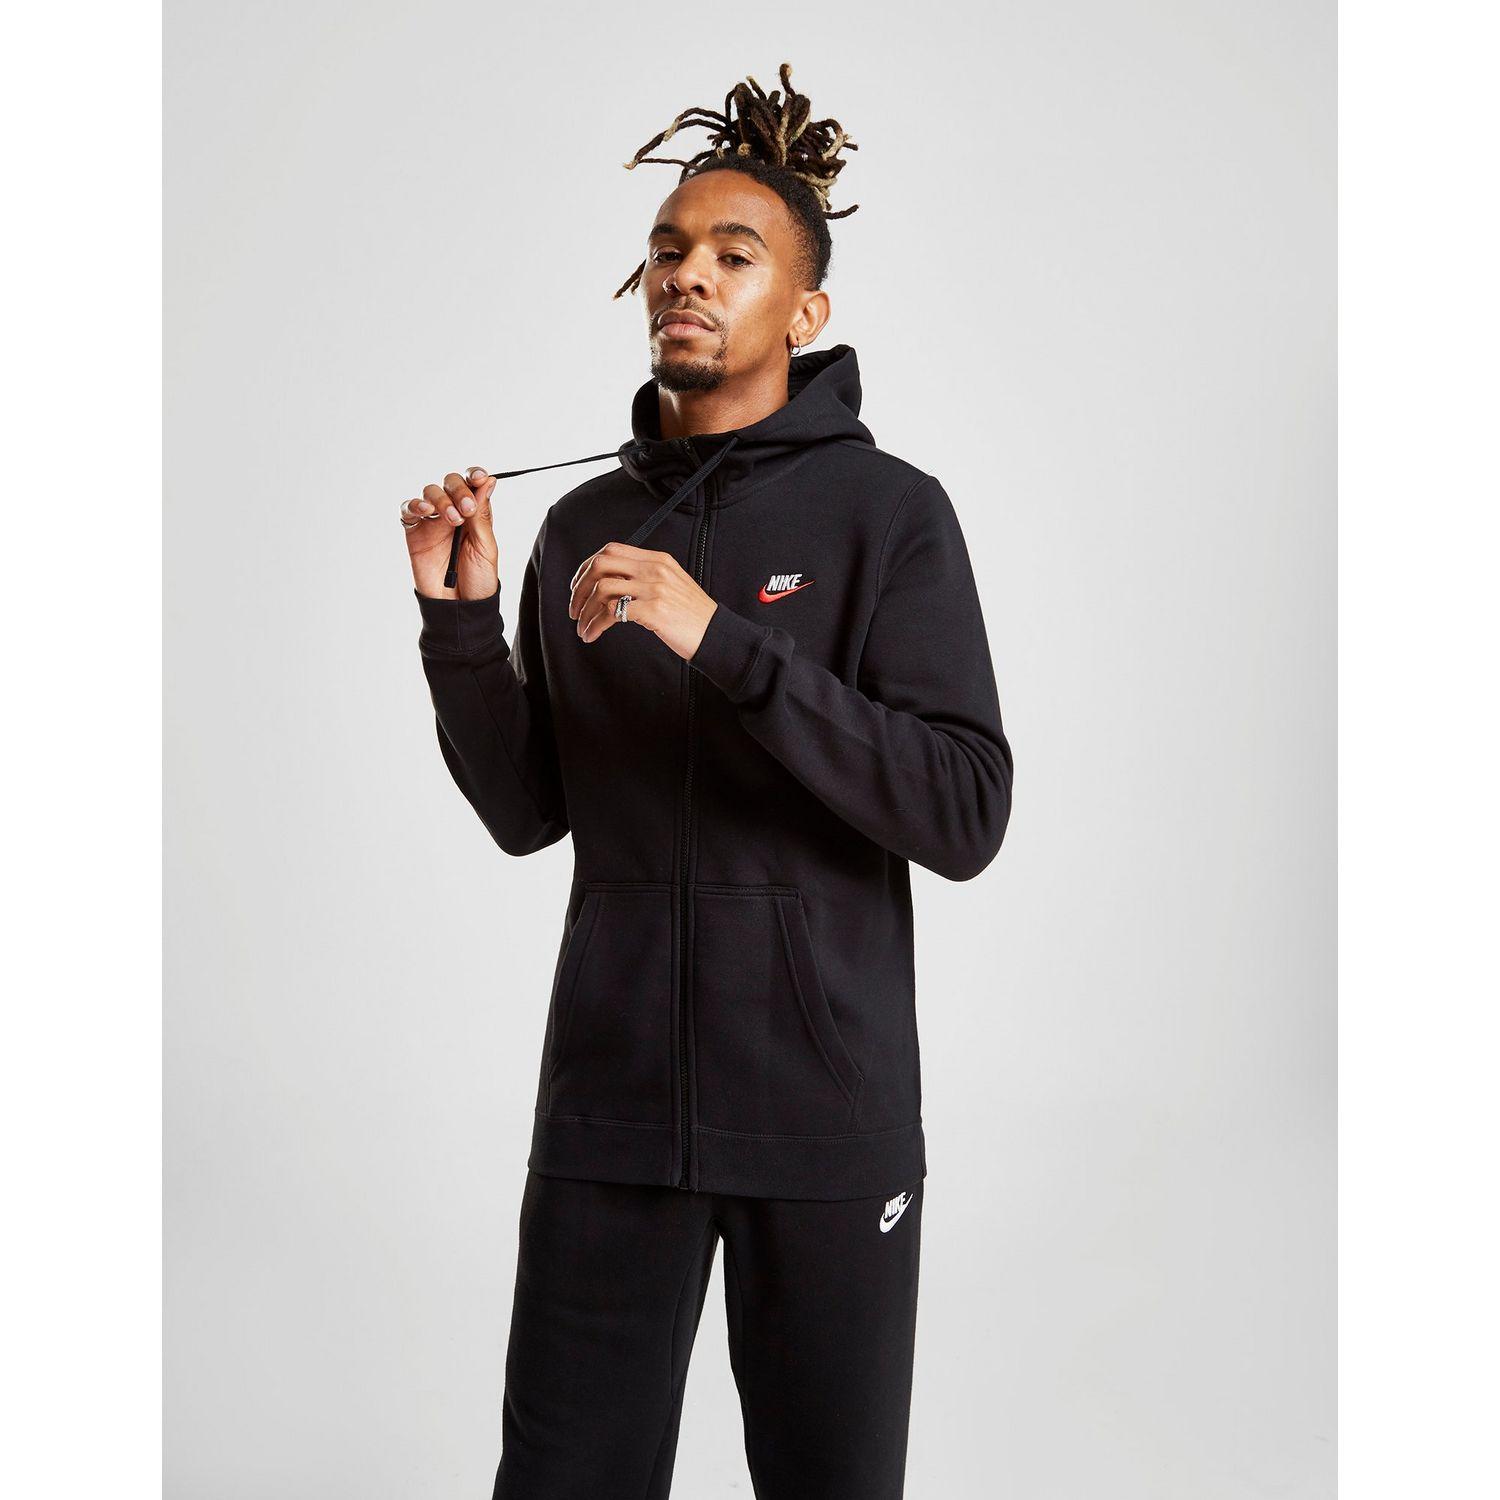 Nike Cotton Foundation Full Zip Hoodie in Black for Men - Lyst